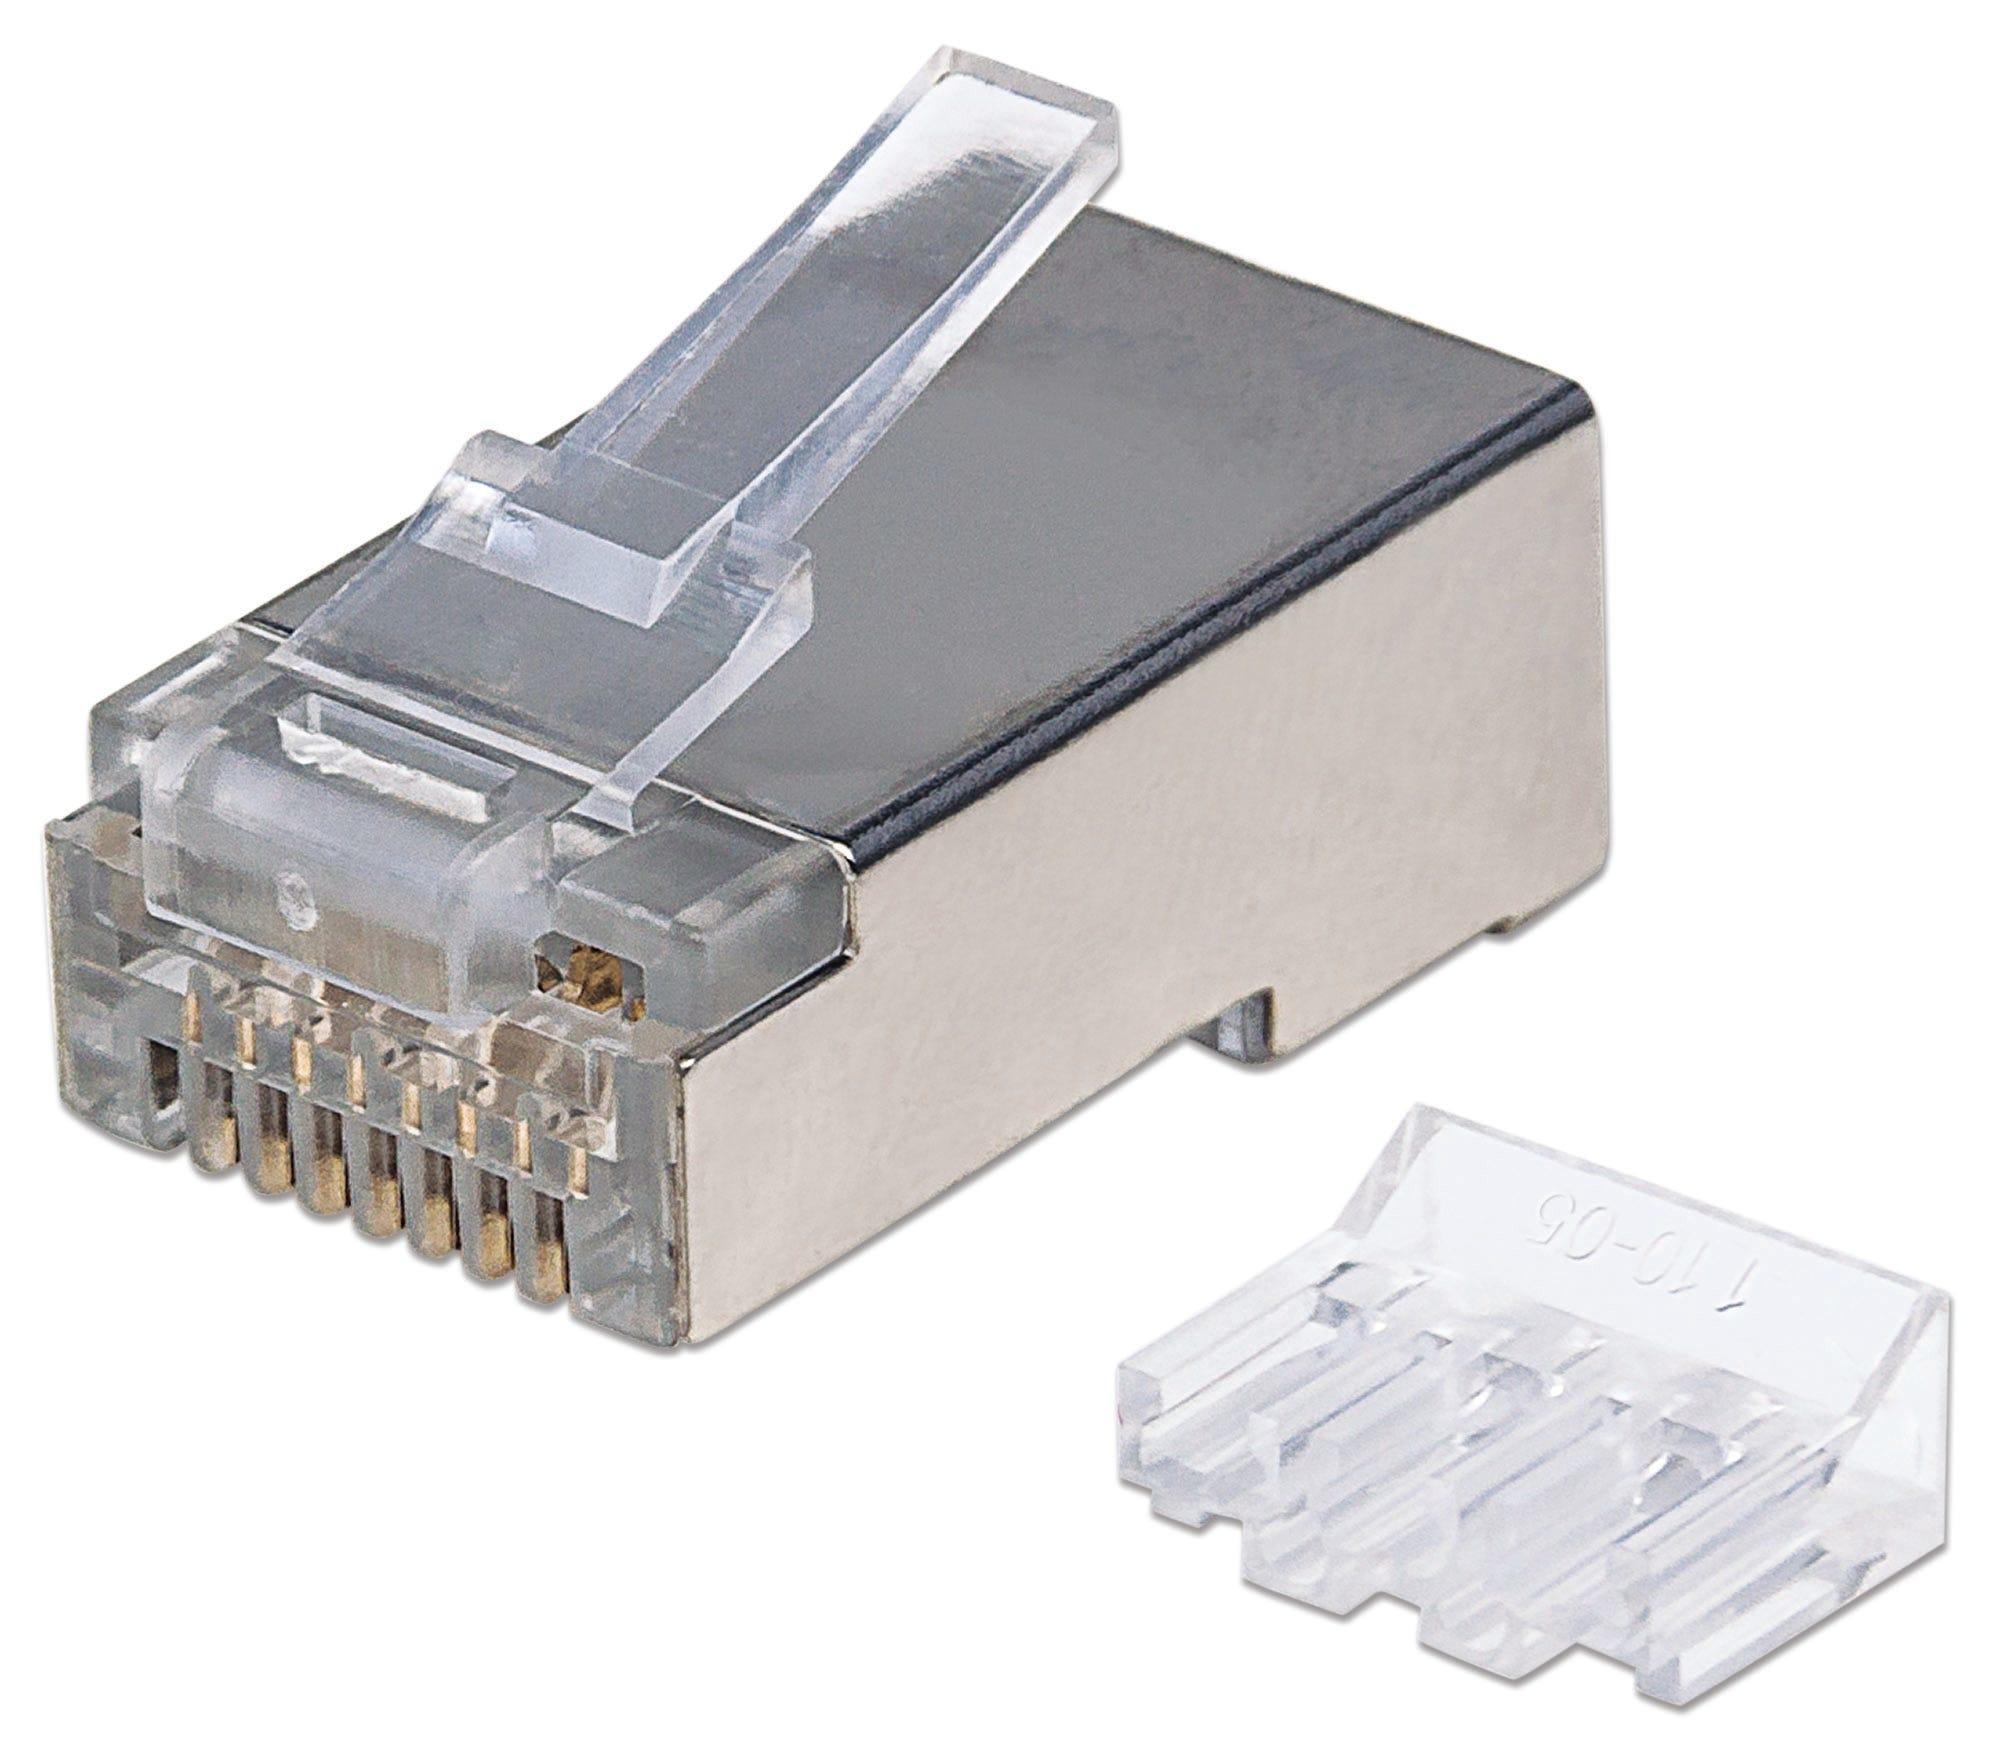 Intellinet 70er-Pack Cat6A RJ45-Modularstecker Pro Line, STP, 3-Punkt-Aderkontaktierung, für Litzen- und Massivdraht, 70 Stecker im Becher, 50 µ vergoldete Kontakte - Netzwerkanschluss - RJ-45 (M)